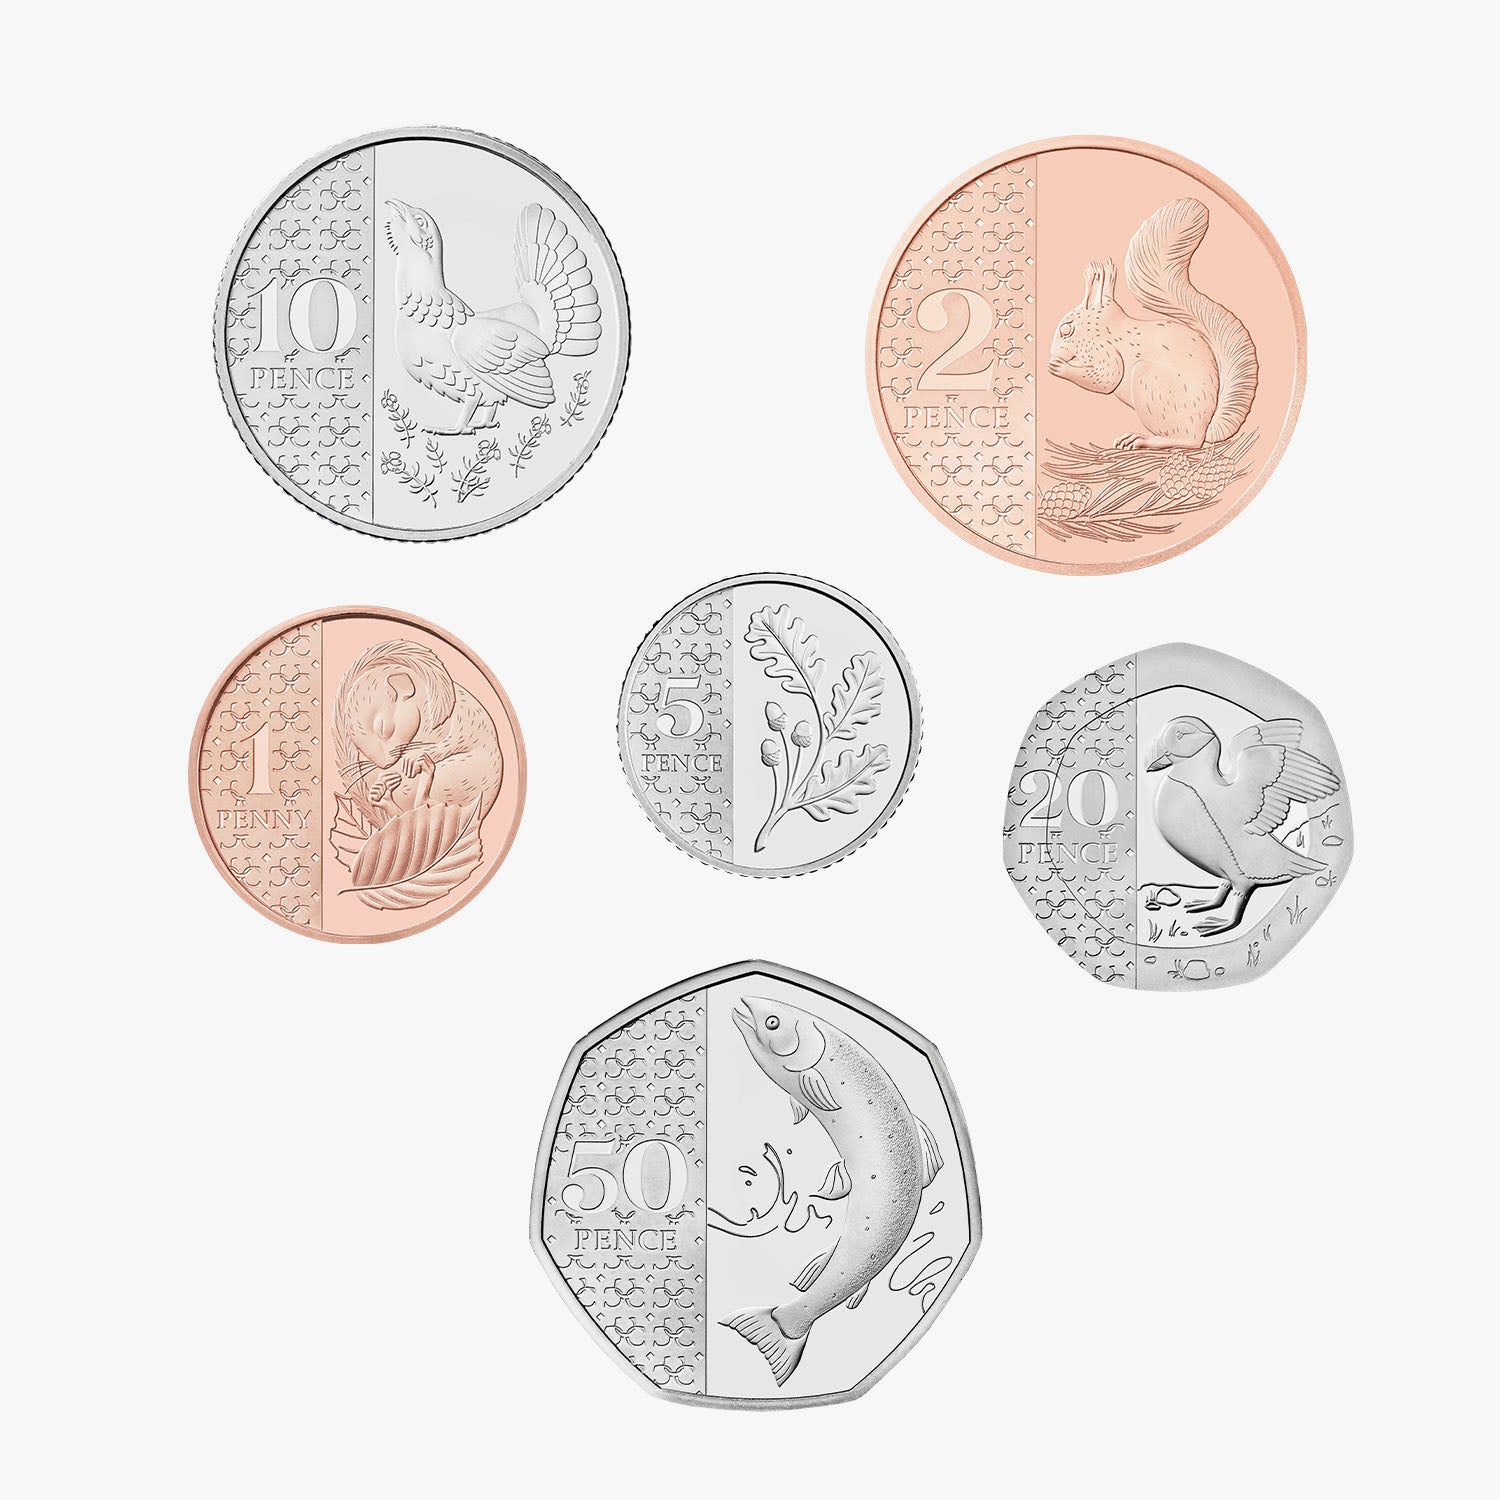 The 2024 United Kingdom Brilliant Uncirculated Definitive Coin Set